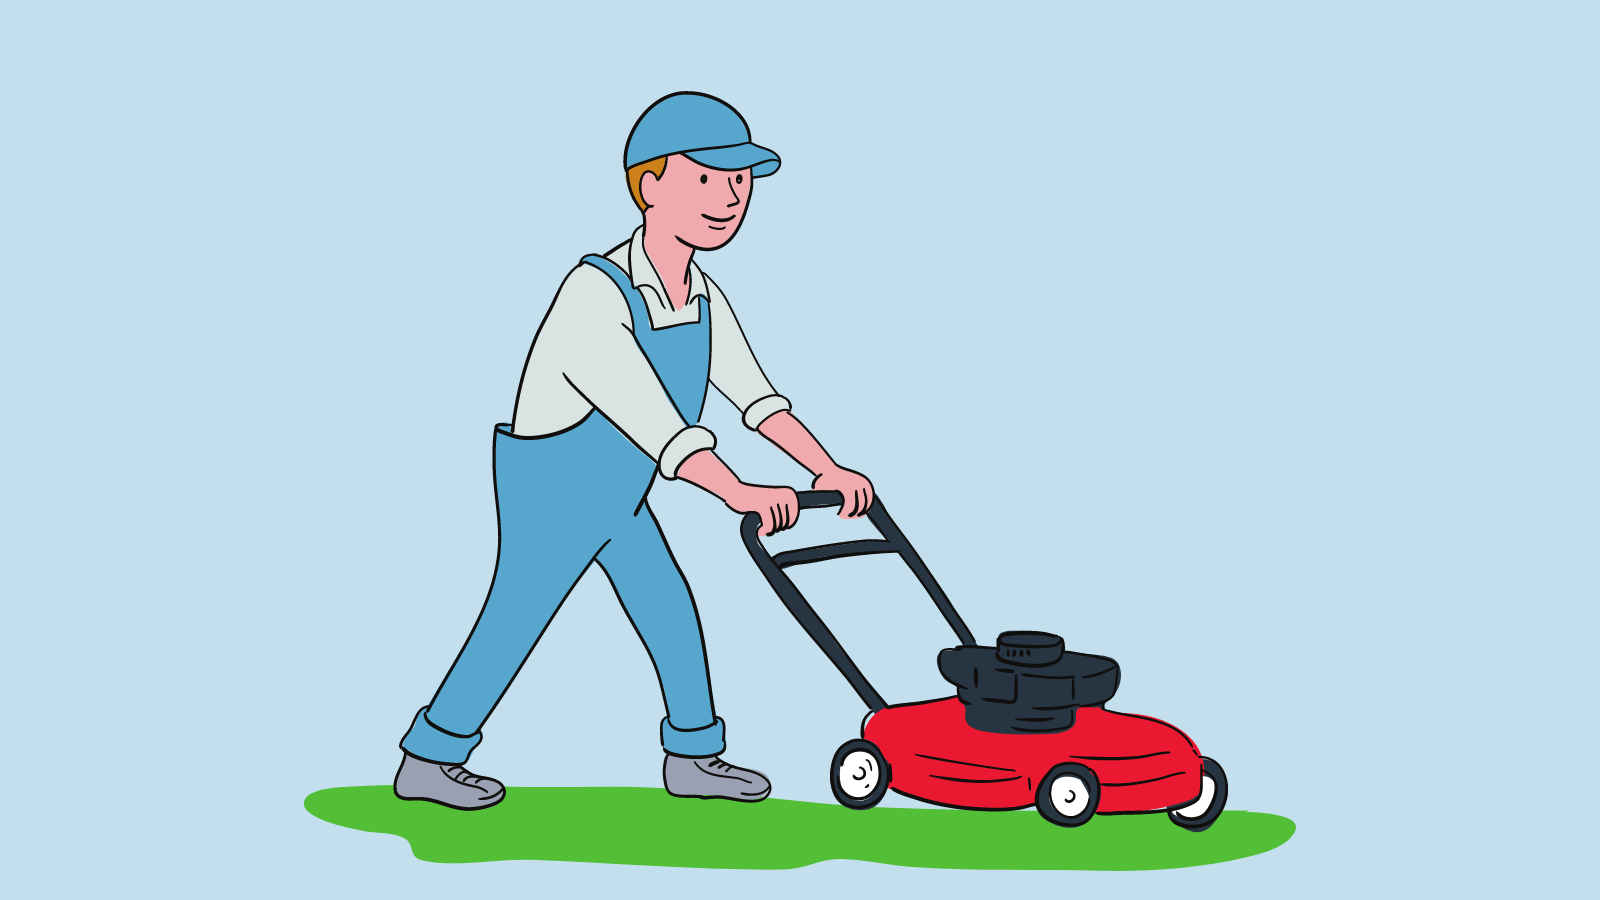 A man pushing a lawn mower